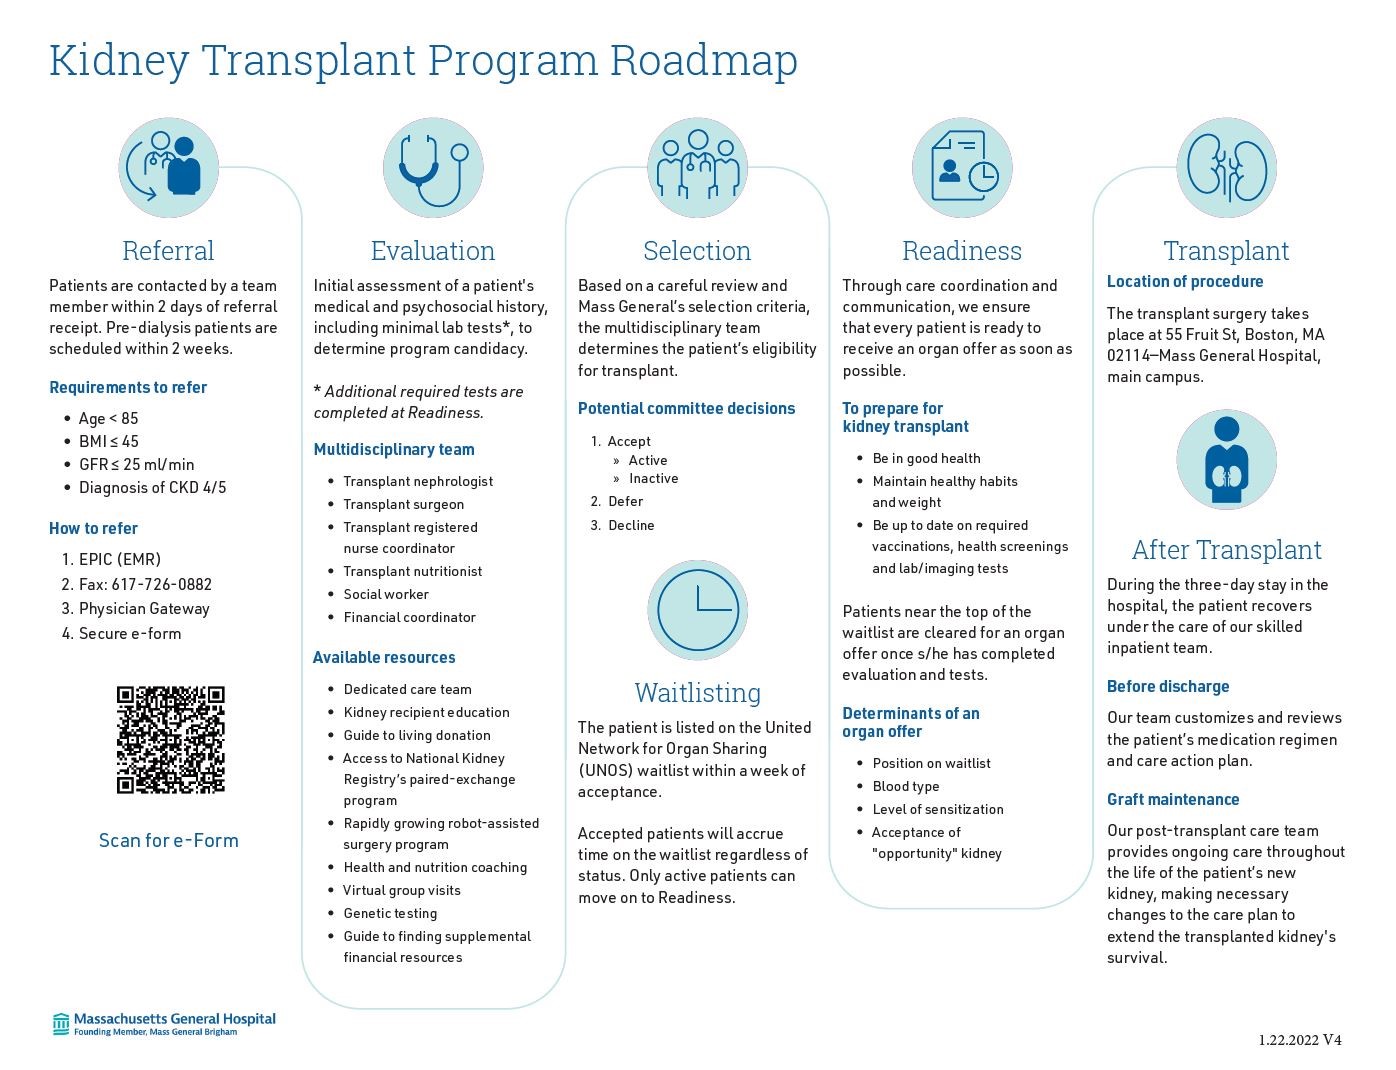 Kidney transplant program roadmap